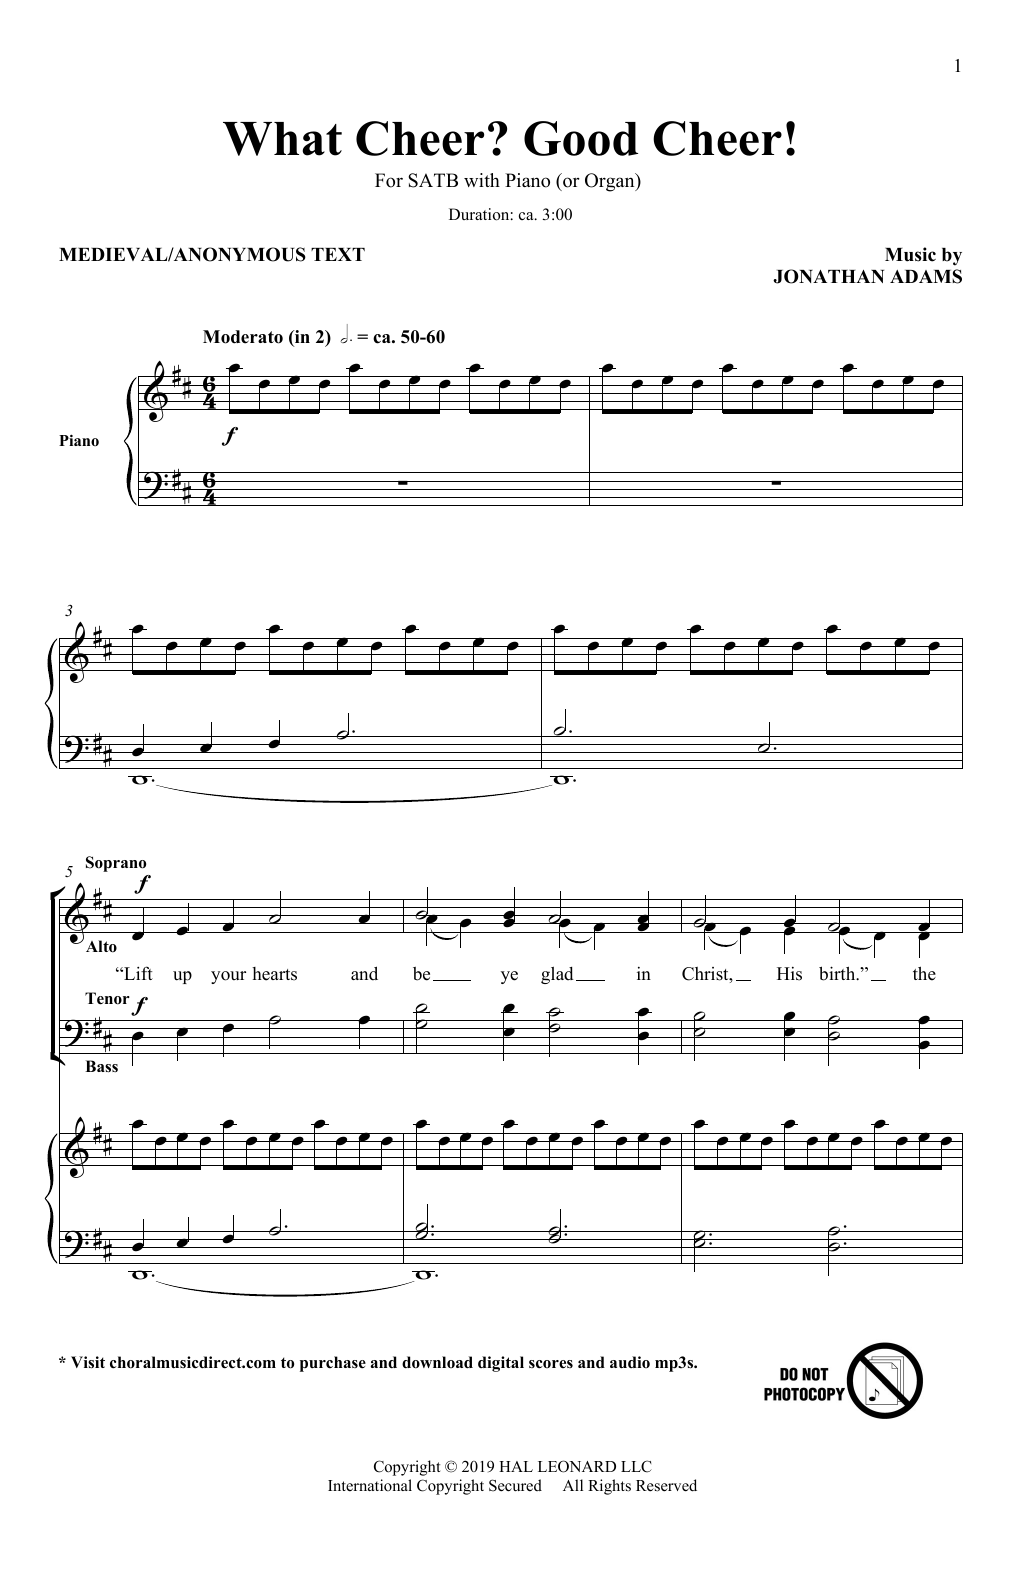 Jonathan Adams What Cheer? Good Cheer! Sheet Music Notes & Chords for SATB Choir - Download or Print PDF